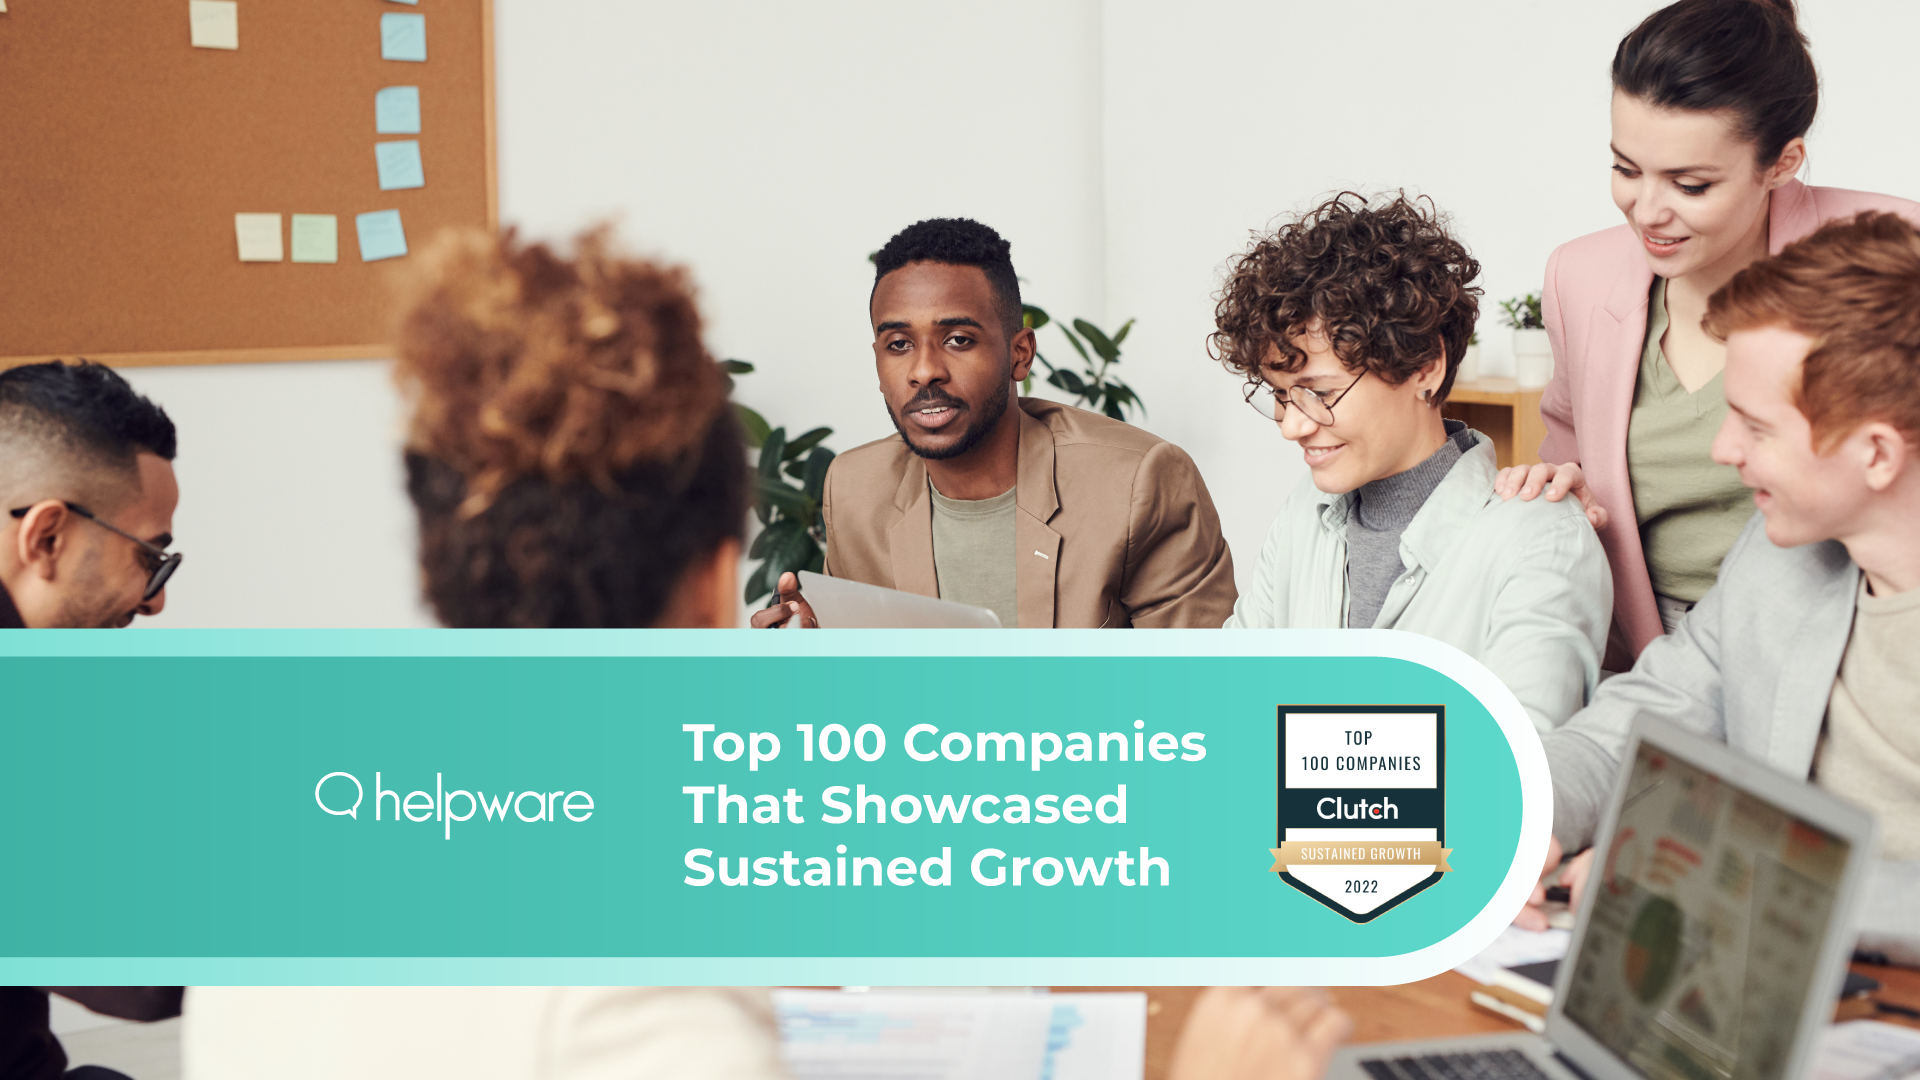 Helpware is Among Top 100 Companies Showcasing Sustainable Growth